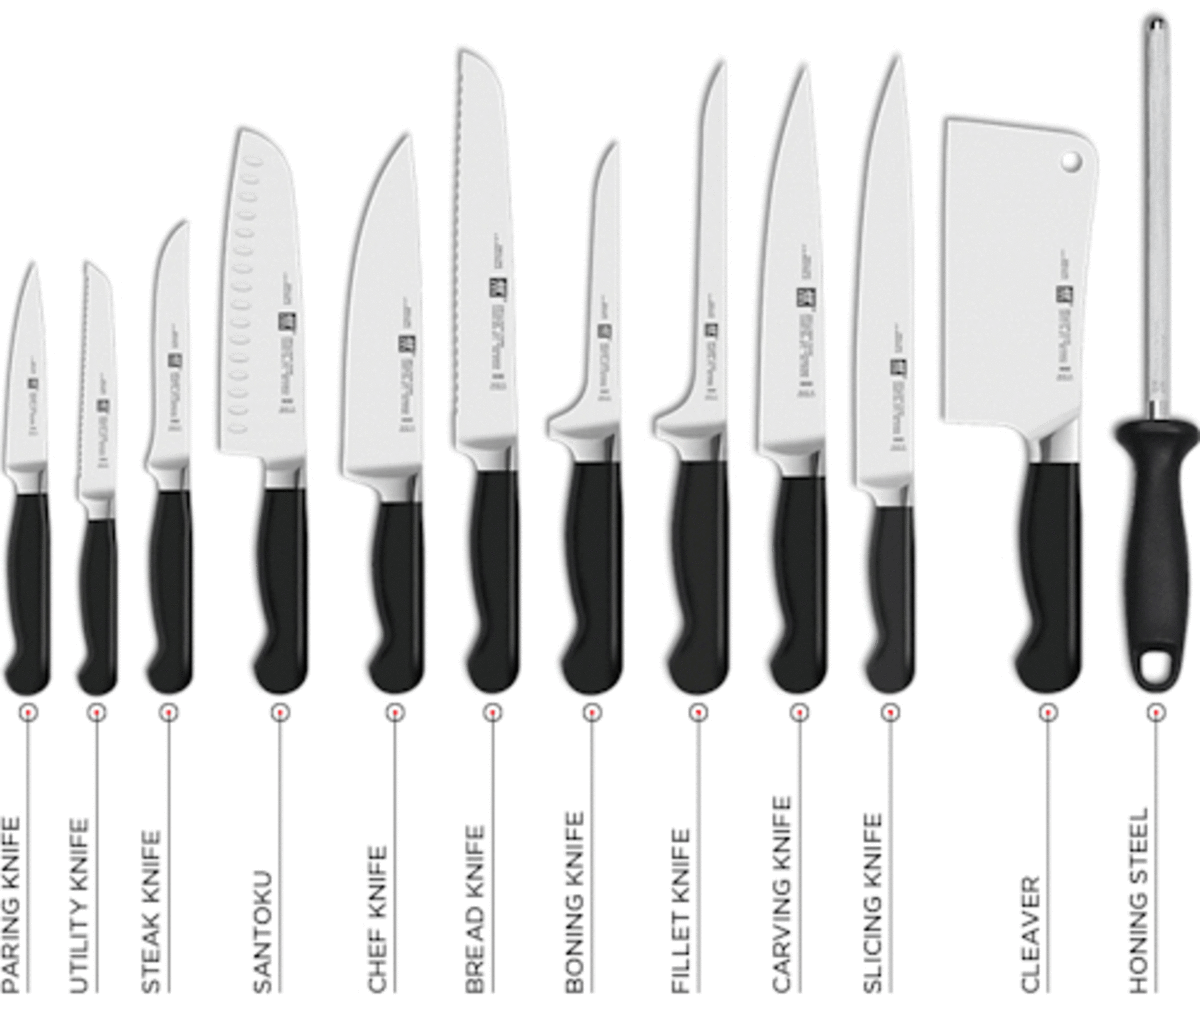 формы кухонных ножей фото